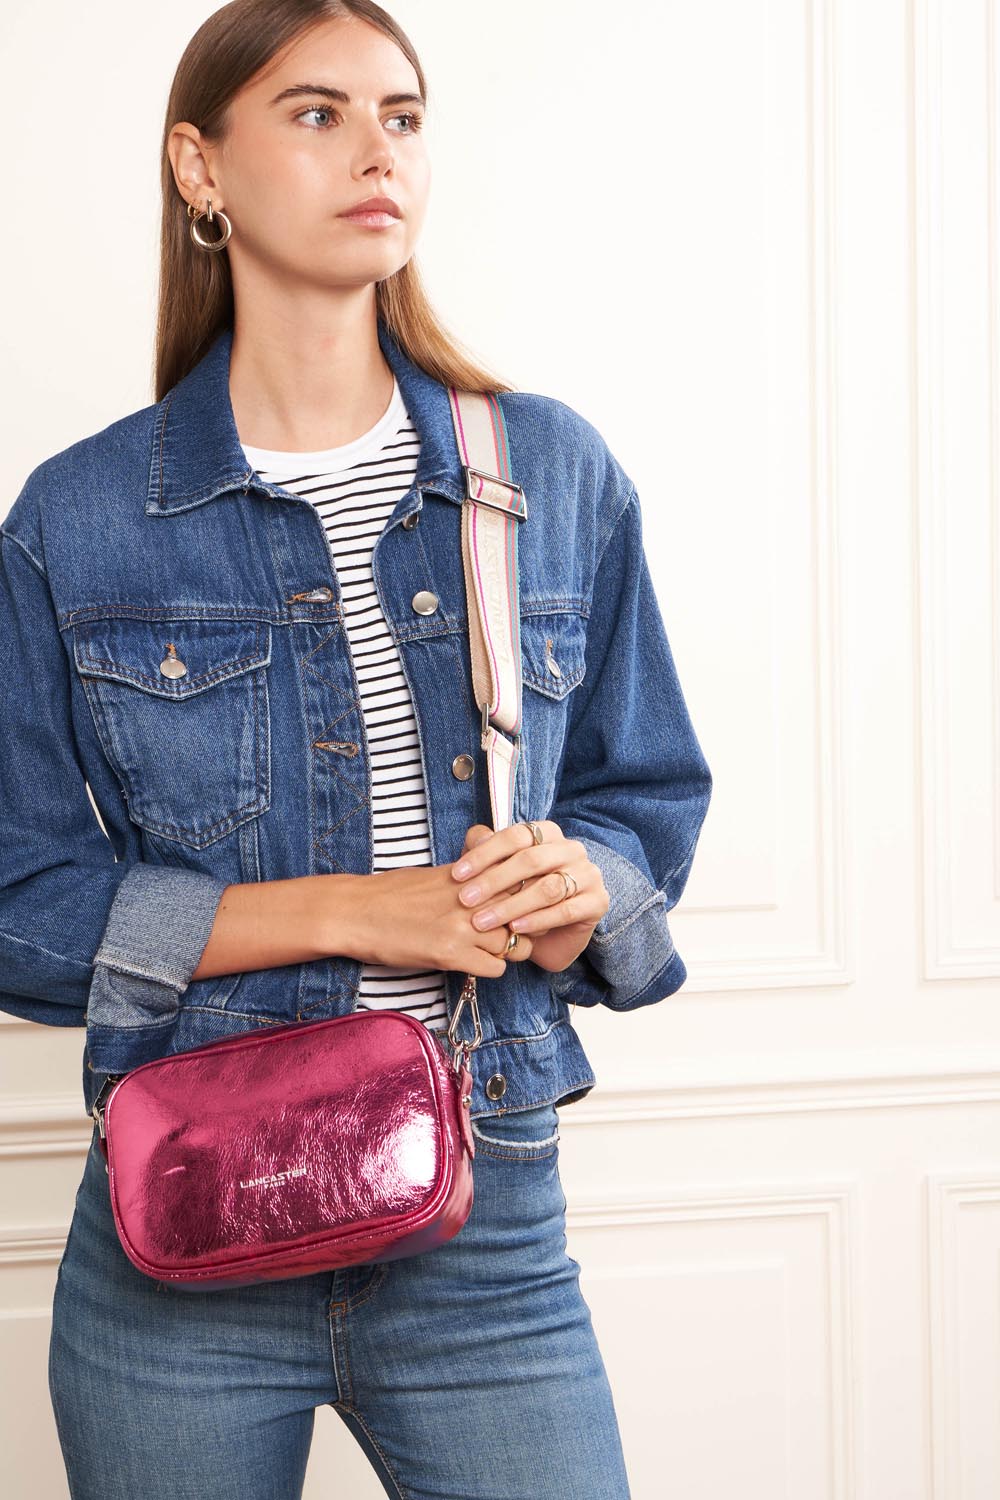 sac trotteur - fashion fIrenze #couleur_rose-iris